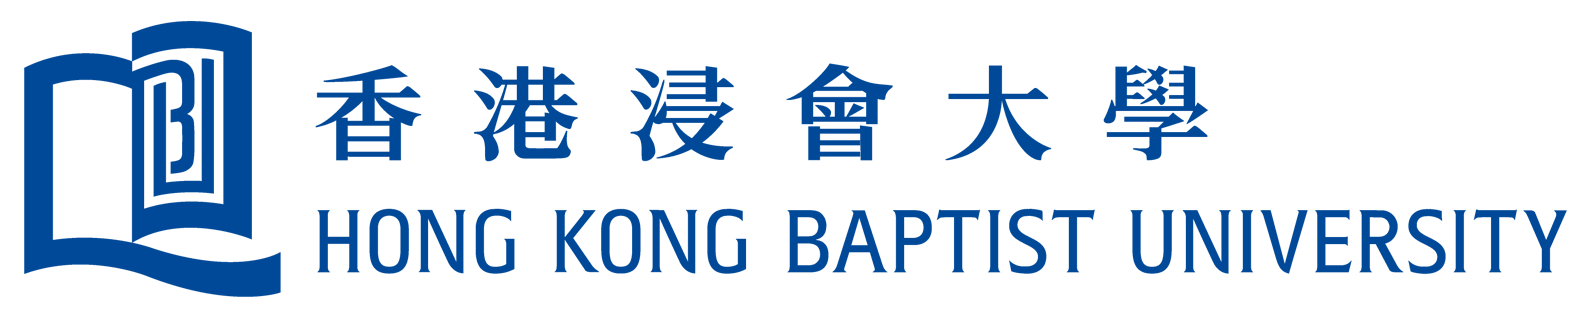 HKBU Calender Logo